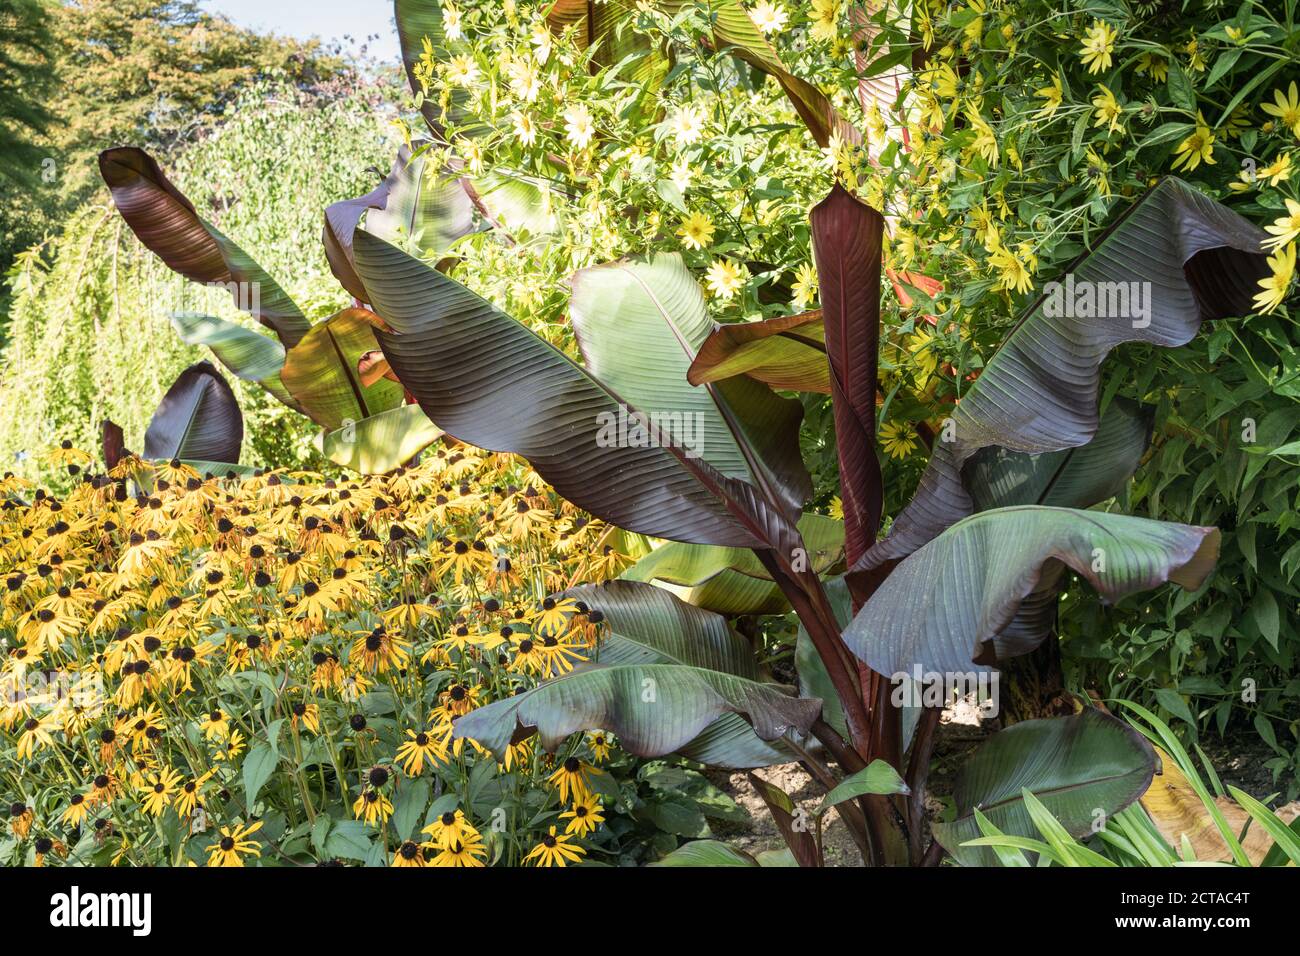 Ethiopian banana and rudbeckia in the border at Sir Harold Hiller Gardens near Romsey in Hampshire Stock Photo